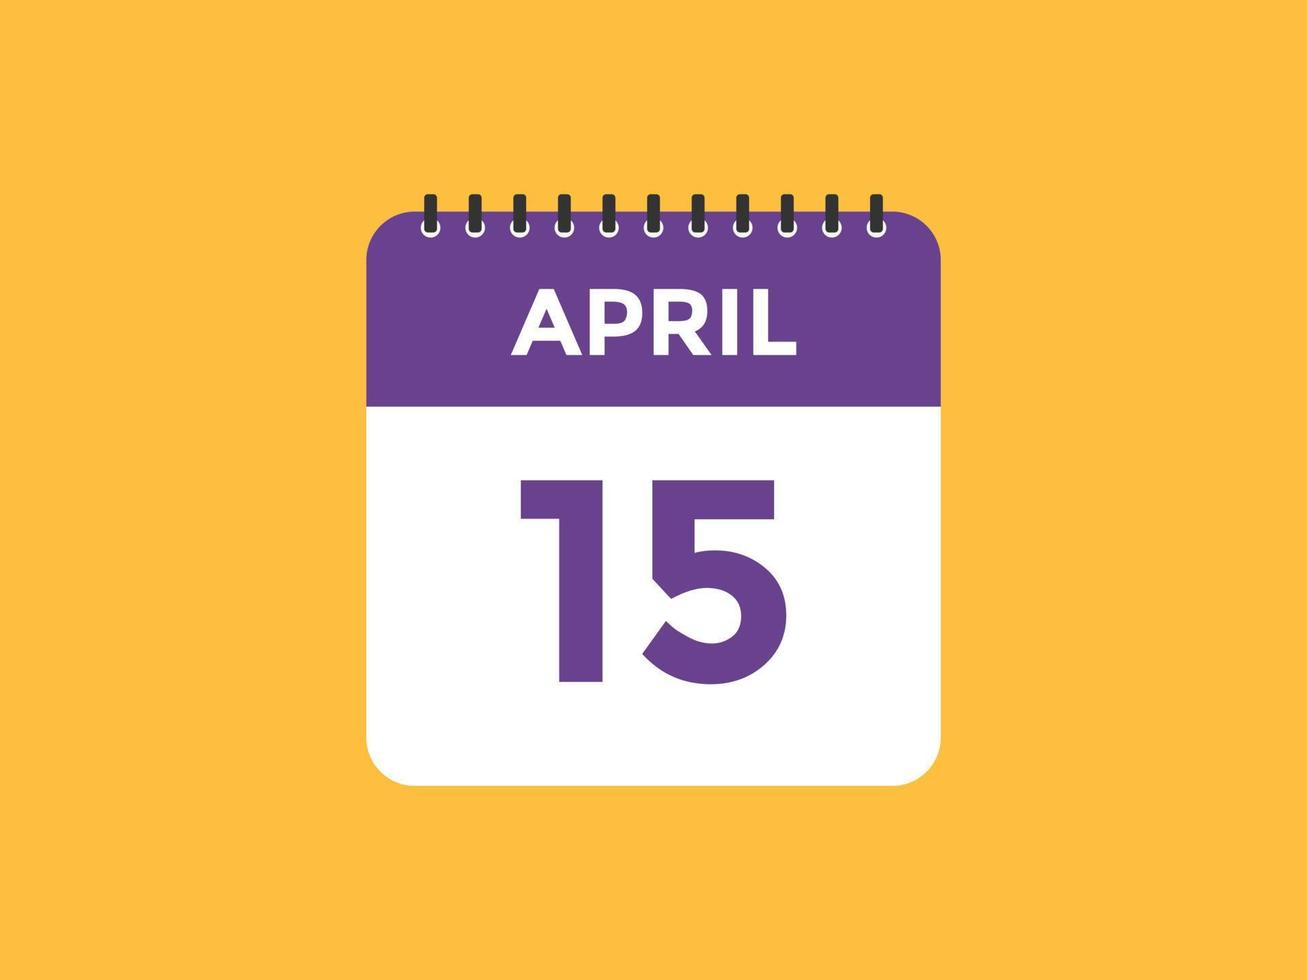 april 15 calendar reminder. 15th april daily calendar icon template. Calendar 15th april icon Design template. Vector illustration